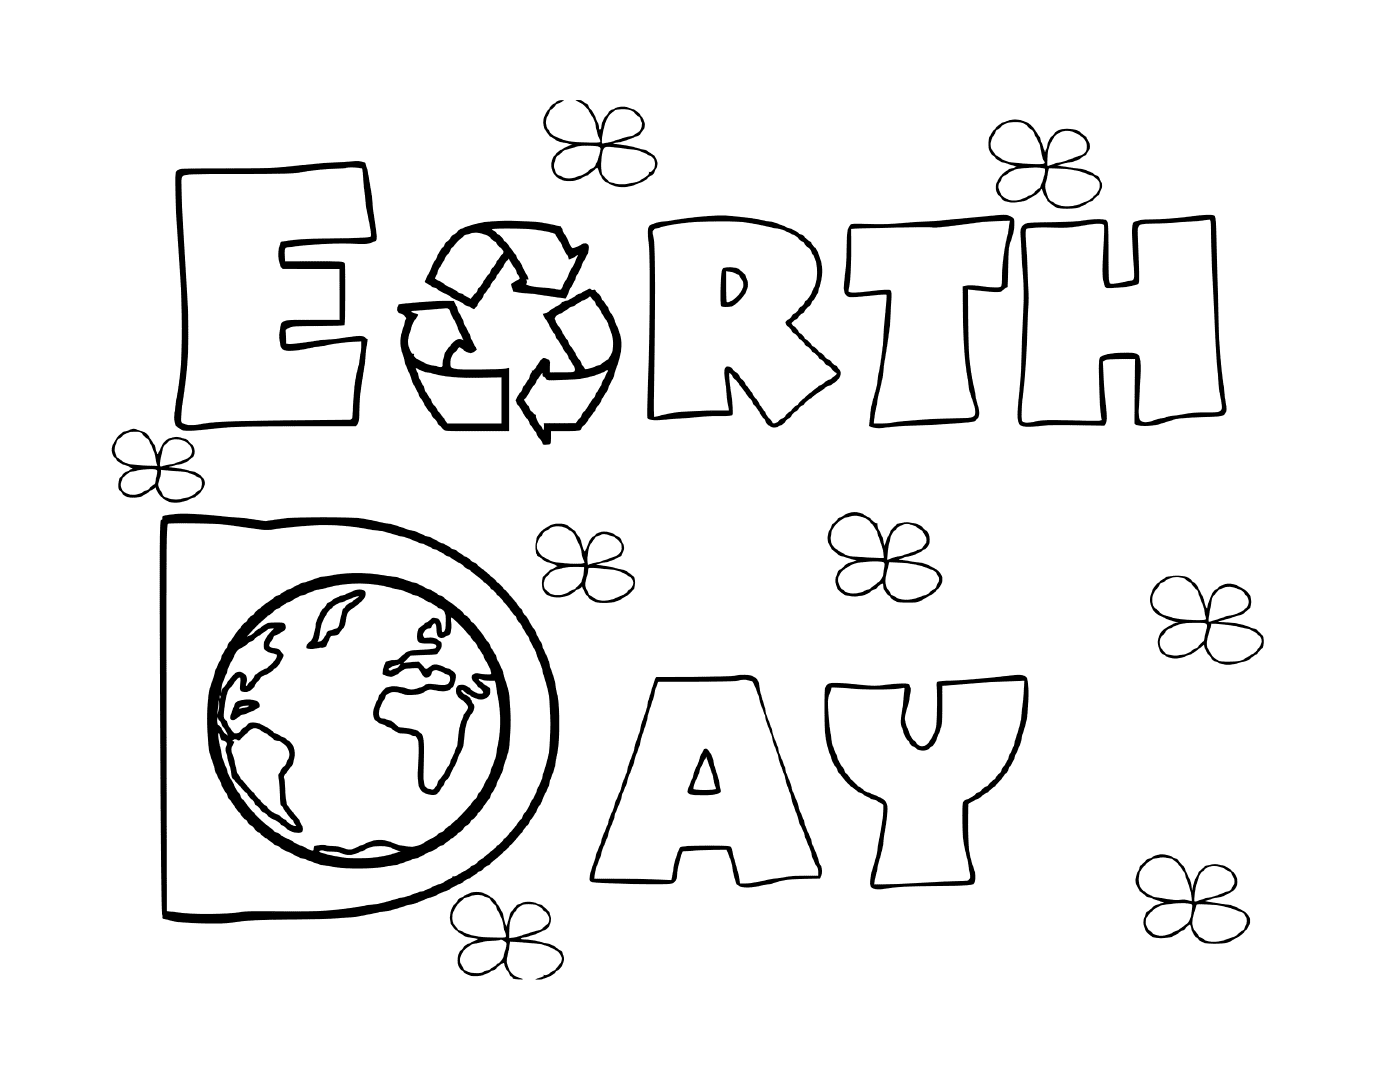  Atividade para o Dia da Terra 